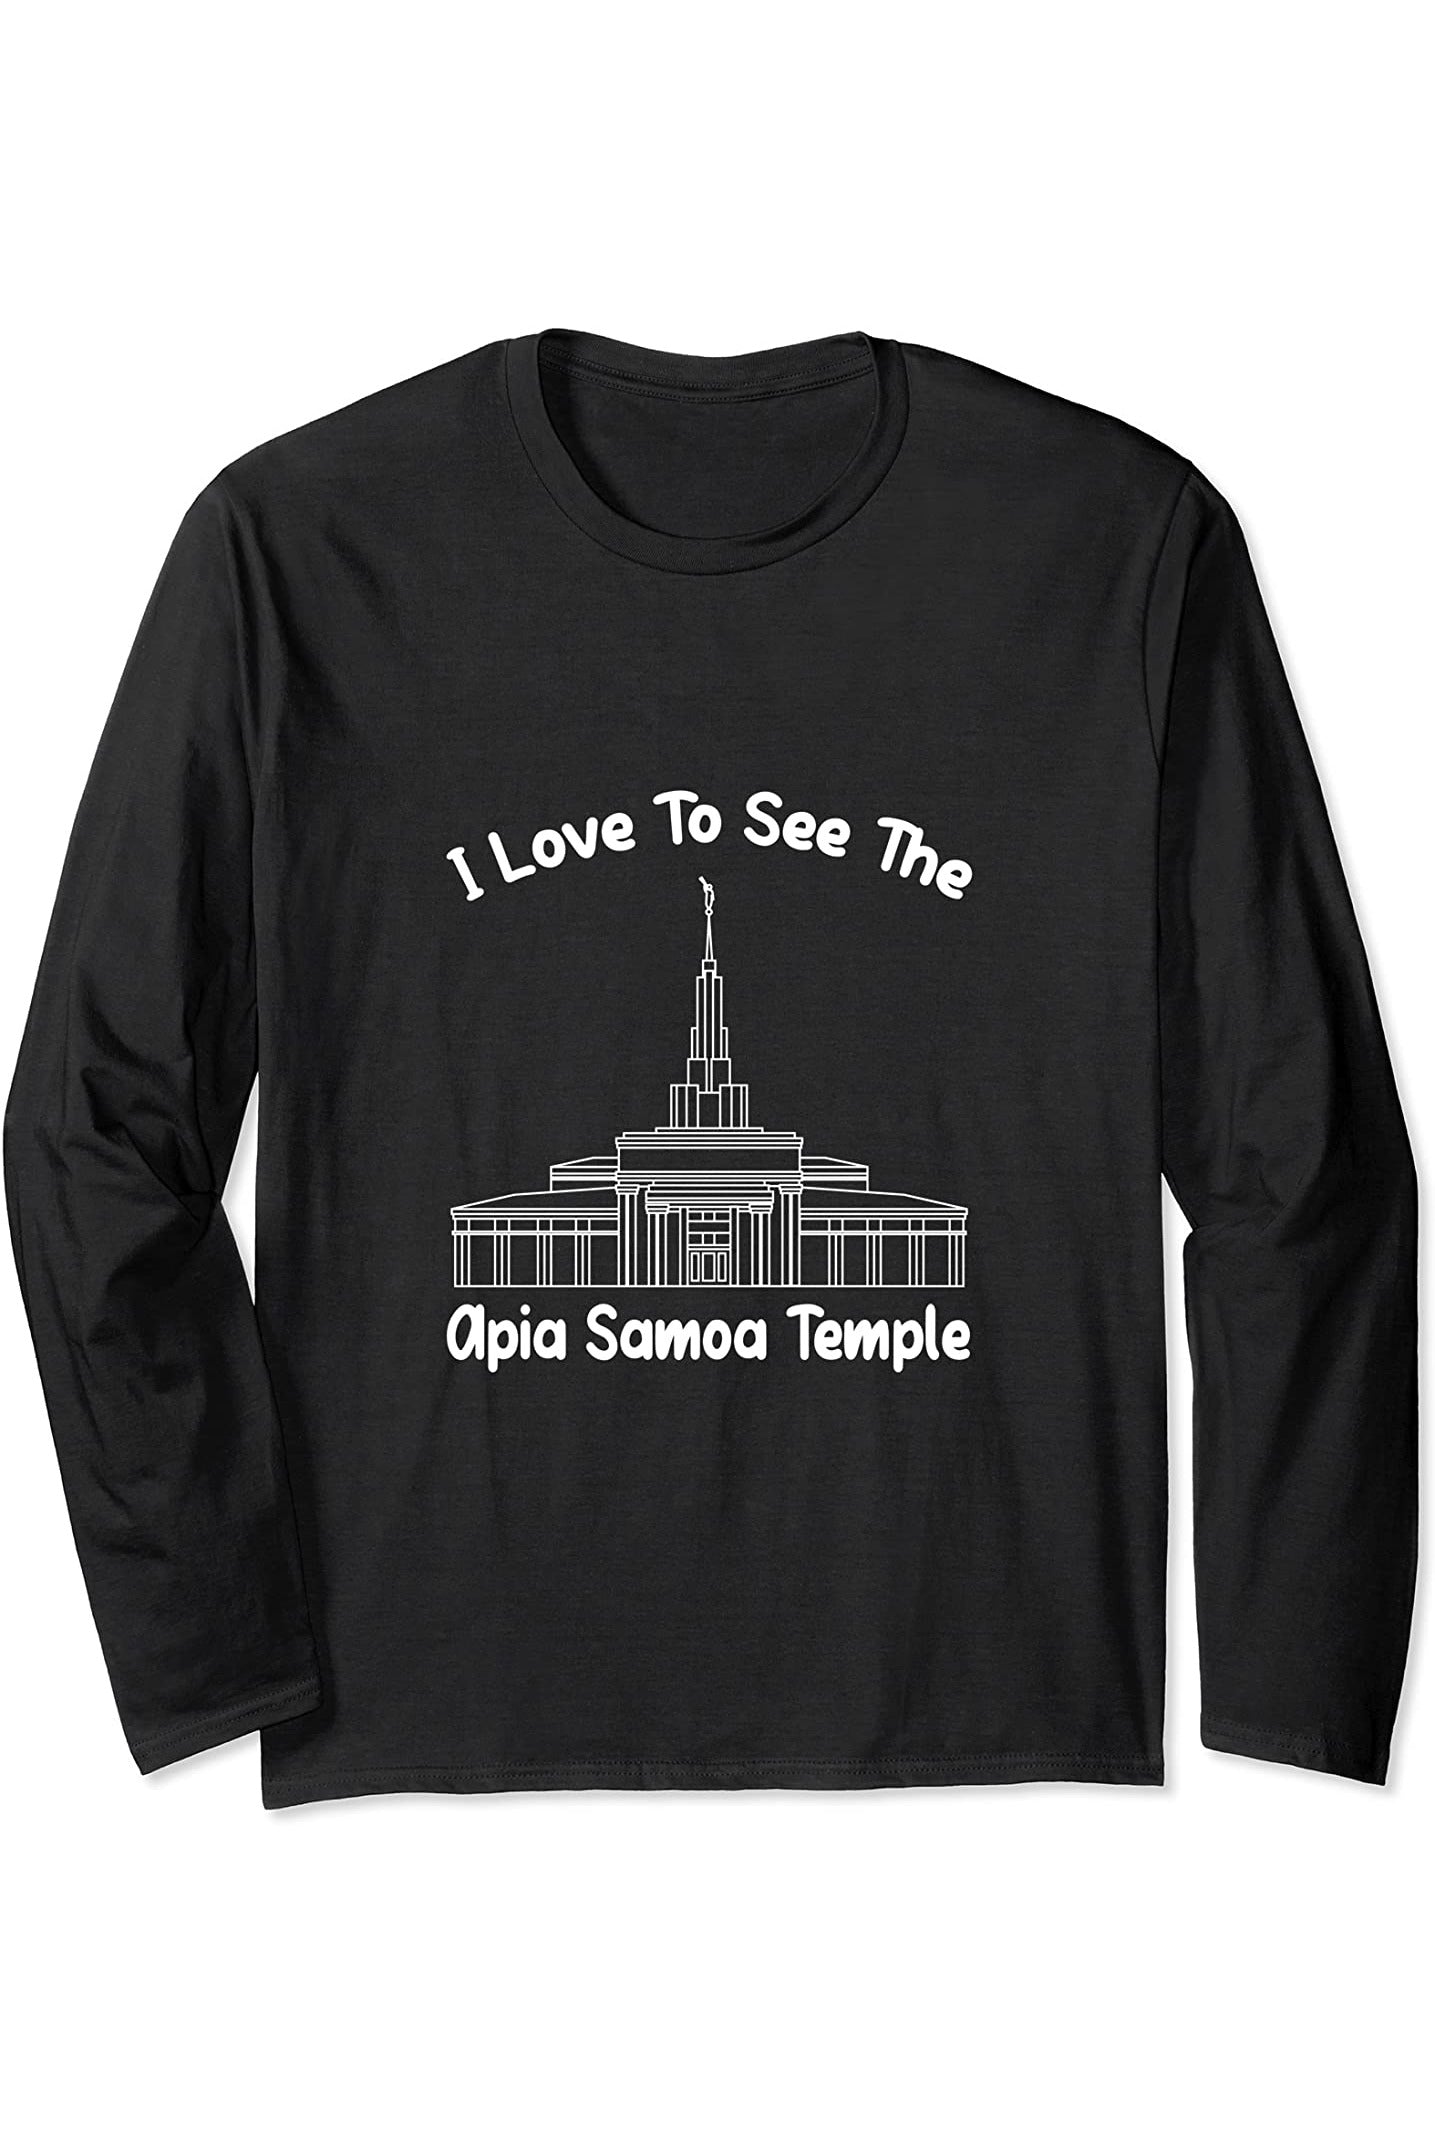 Apia Samoa Temple Long Sleeve T-Shirt - Primary Style (English) US